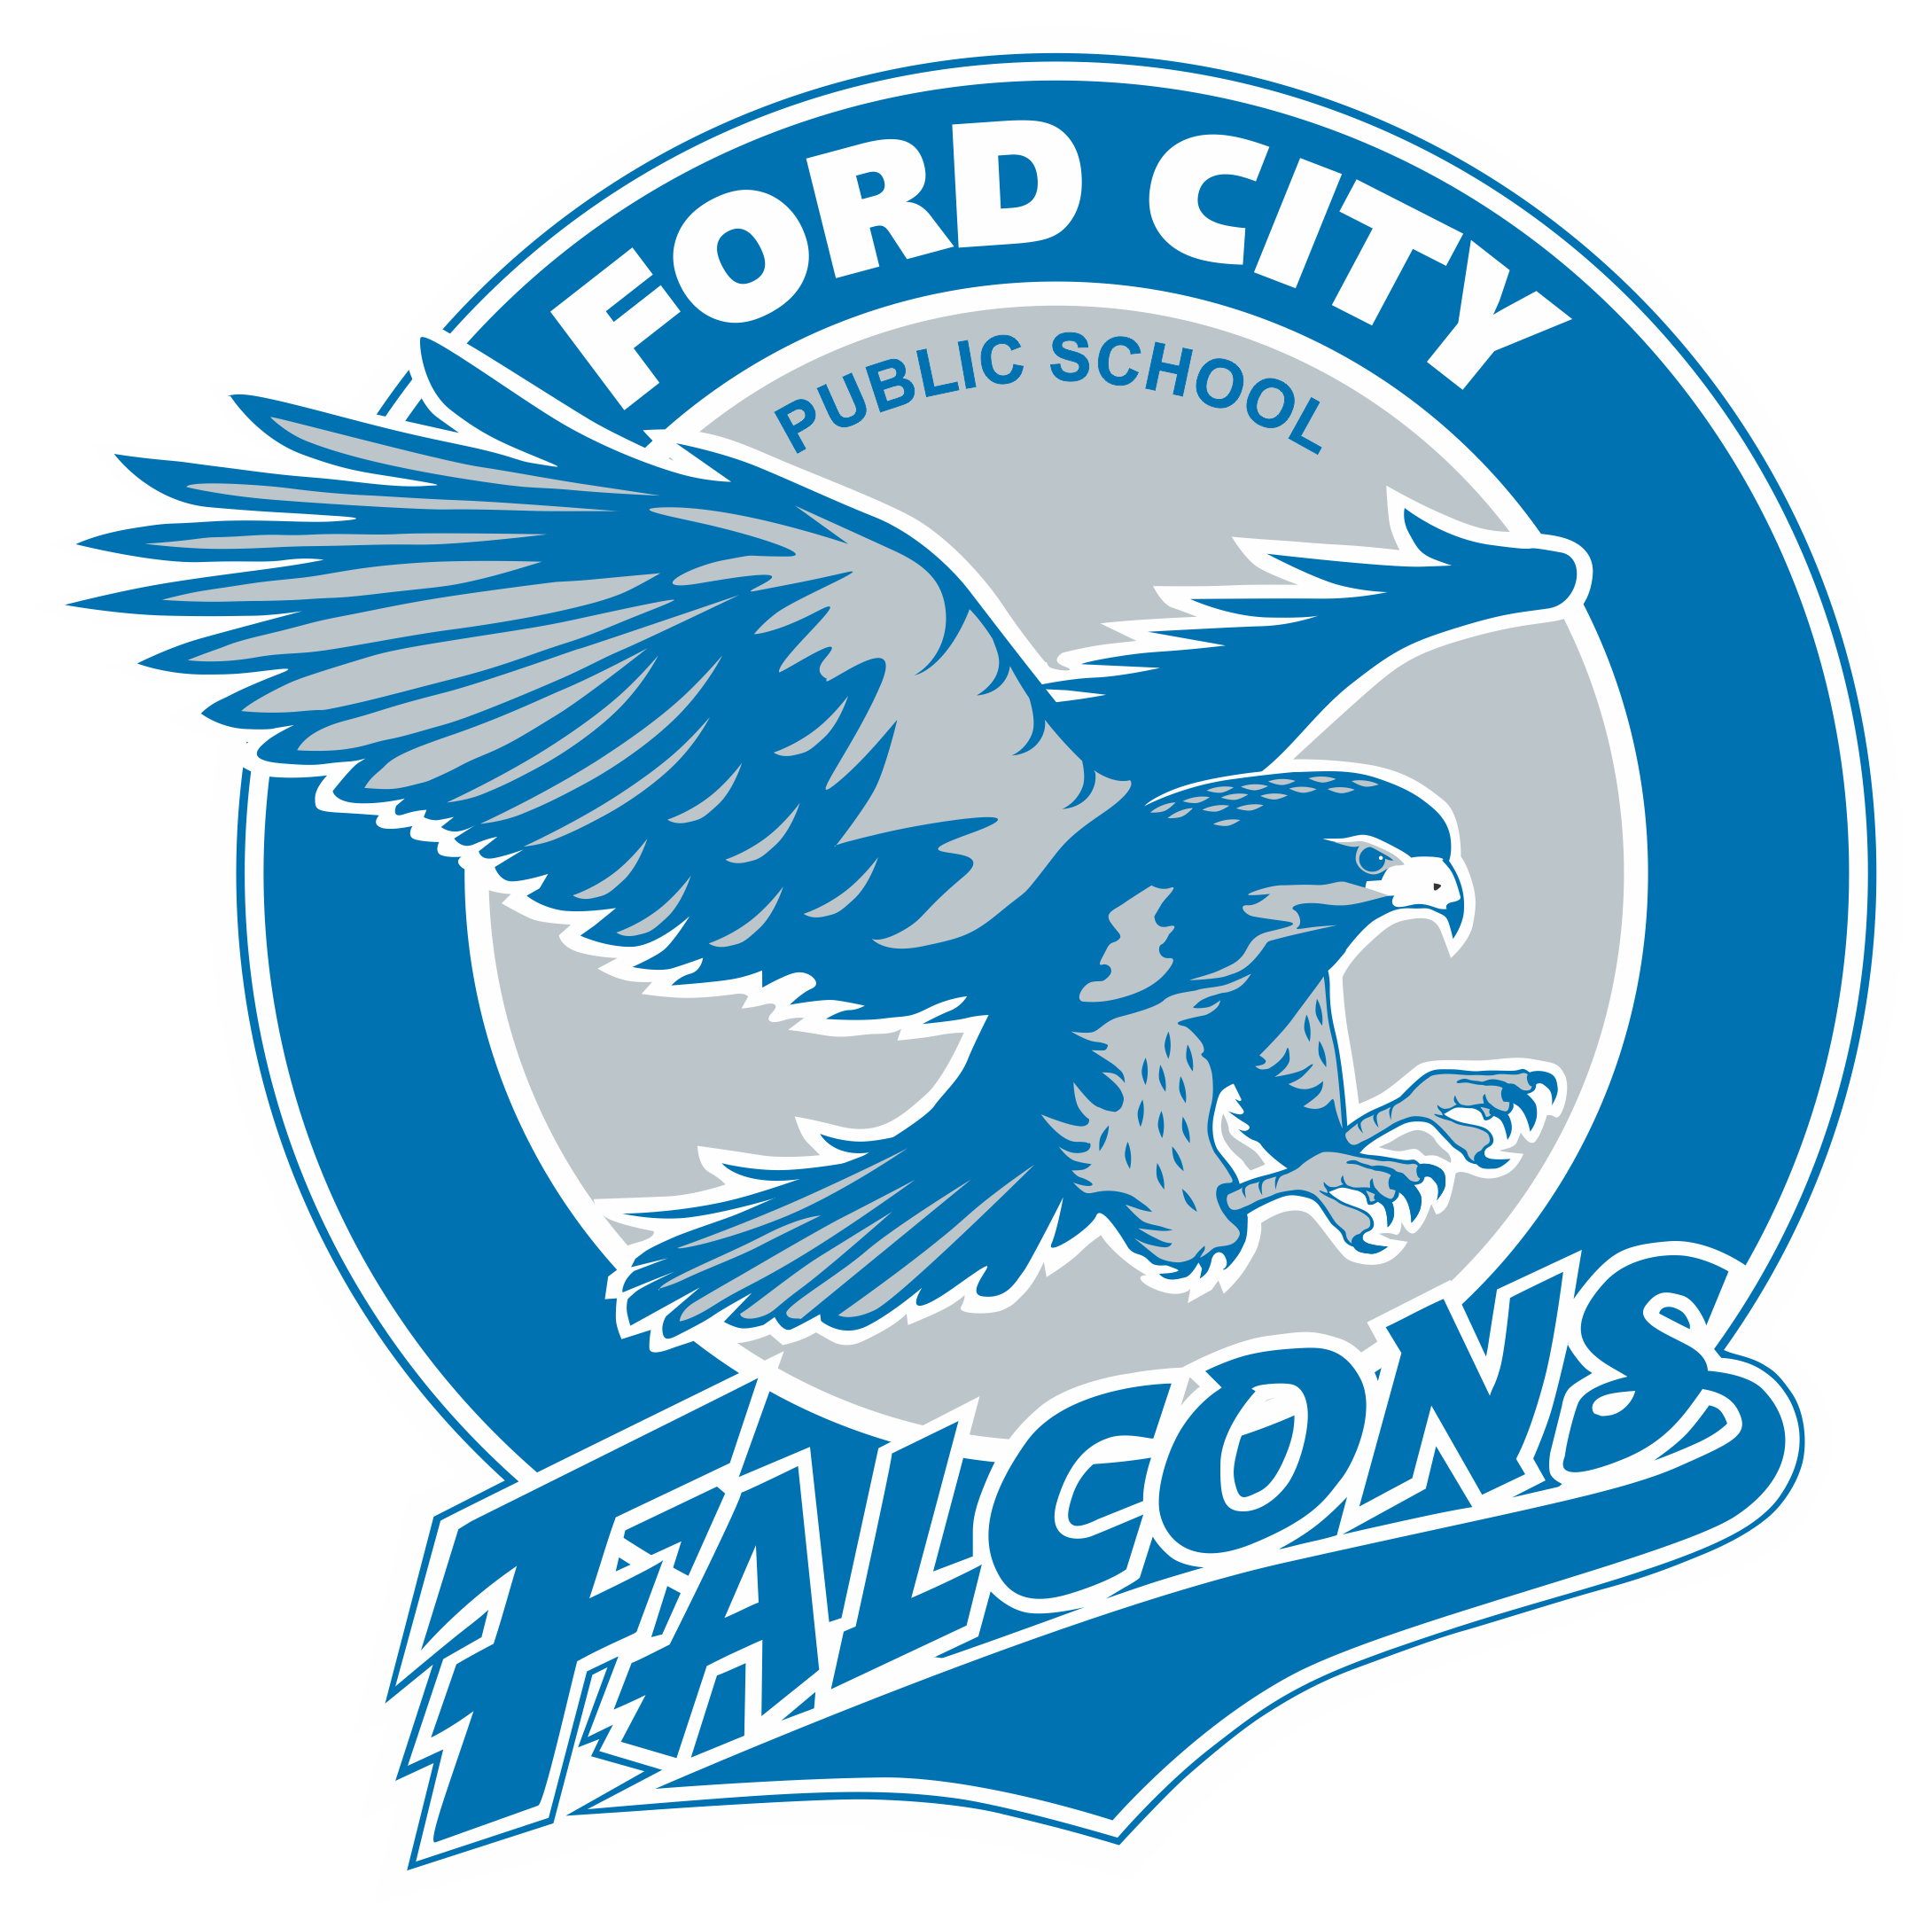 Ford City Public School footer logo